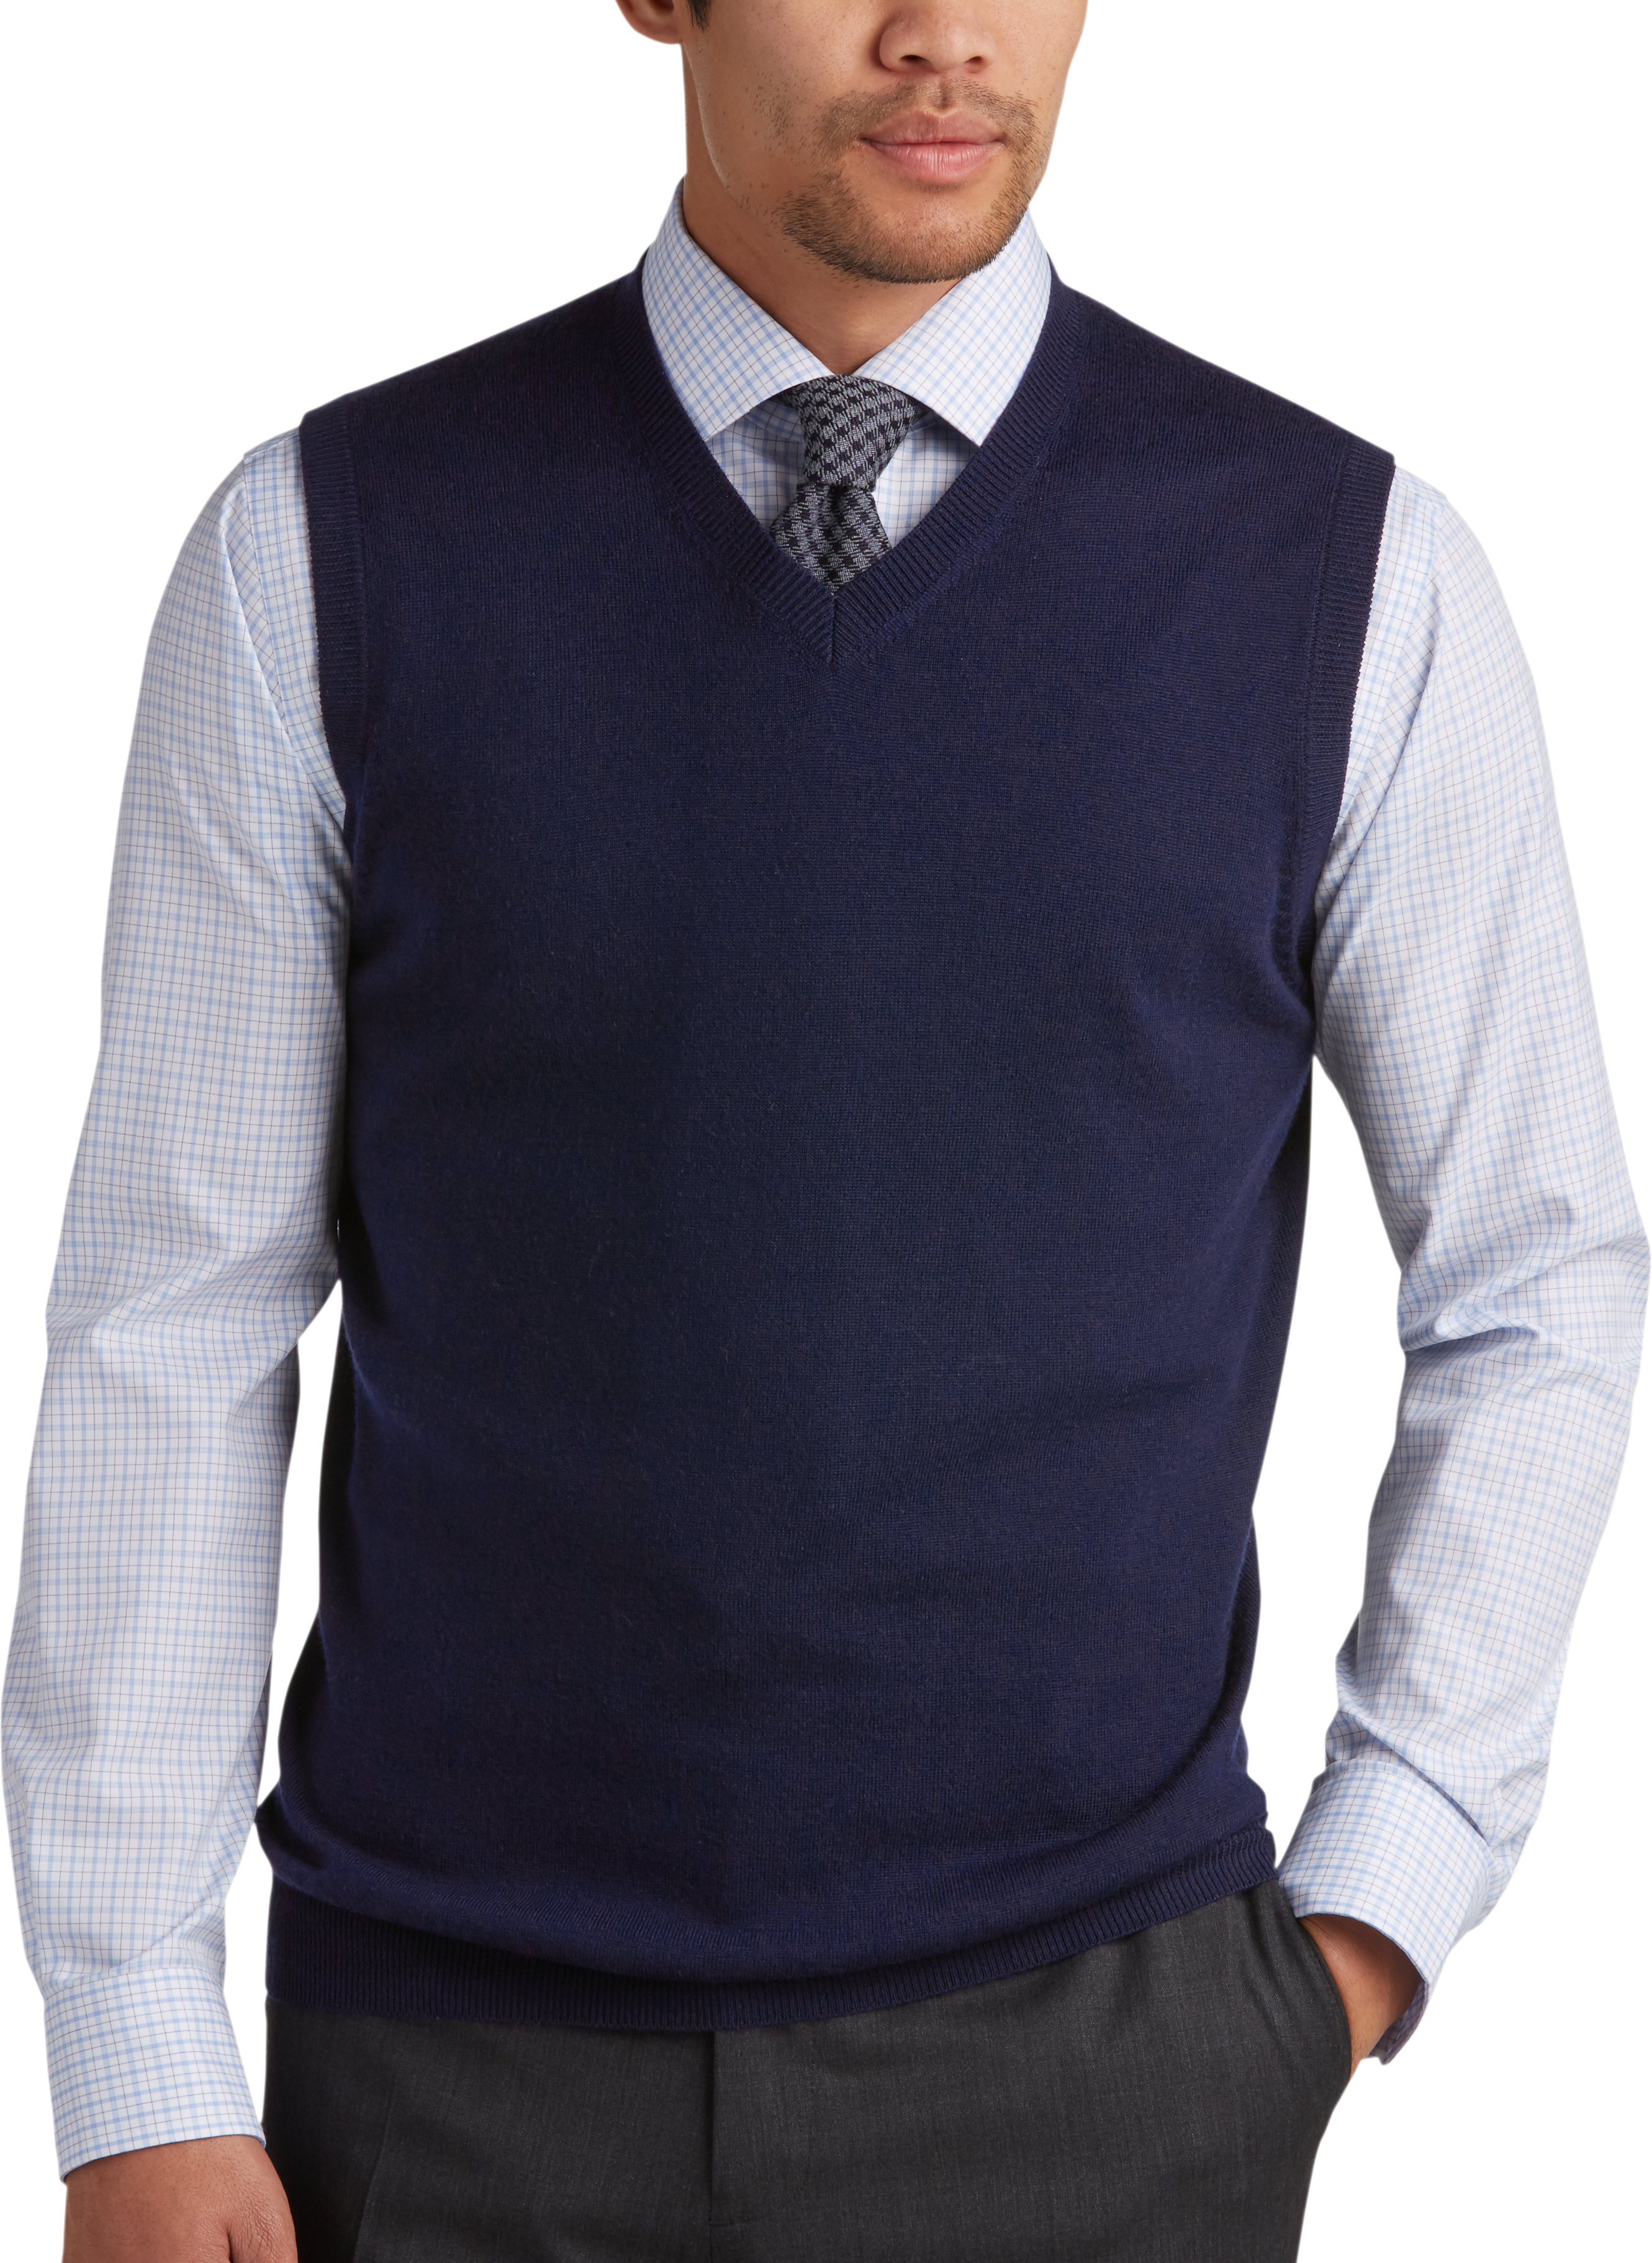 Joseph Abboud Navy V-Neck Modern Fit Sweater Vest - Men's Sale | Men's ...